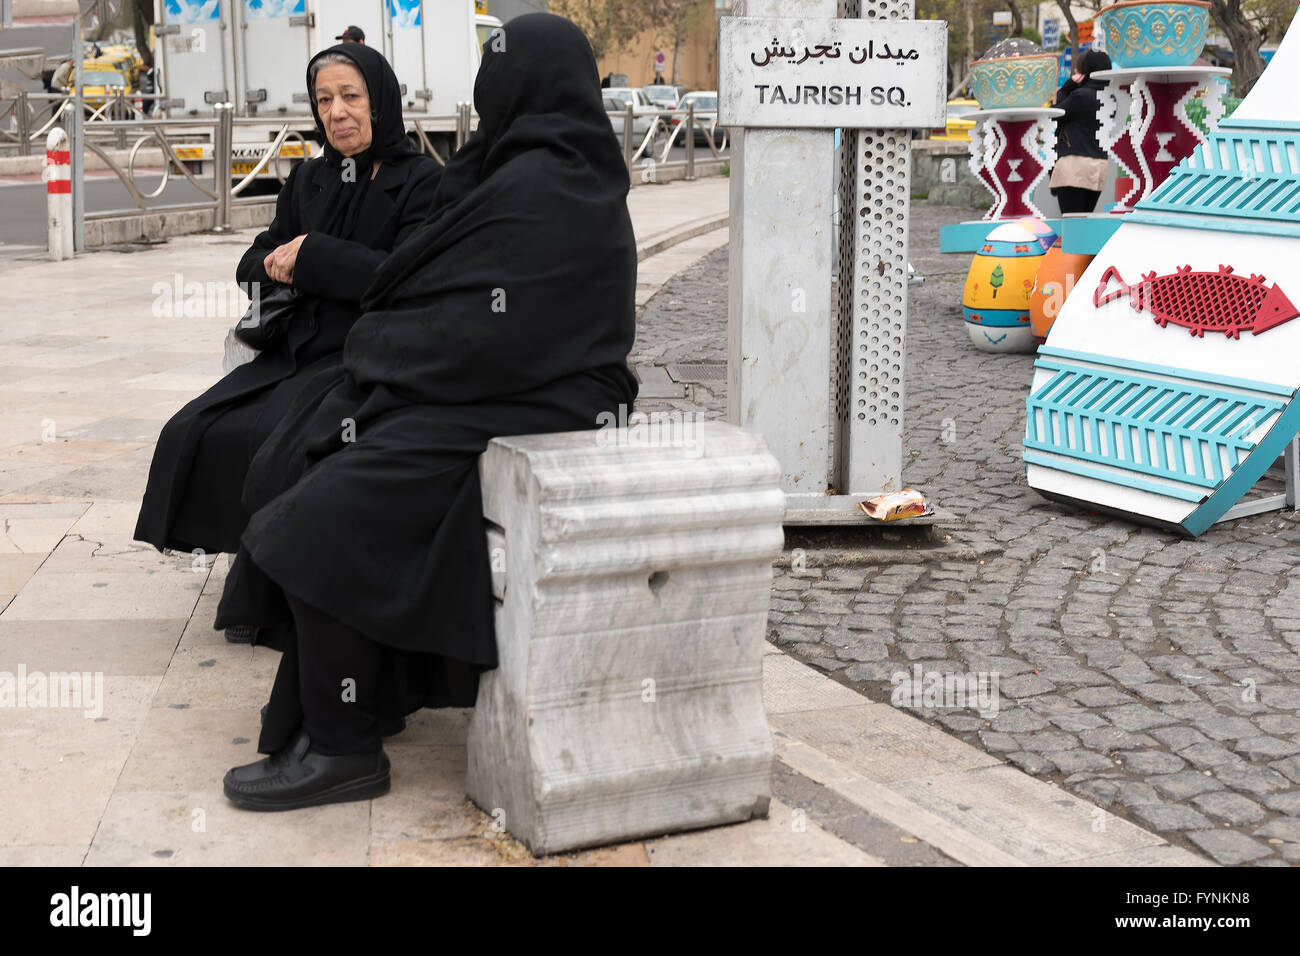 Iranian women wearing black chadors sit on a bench at Tajrish Square in Tehran, Iran. Stock Photo